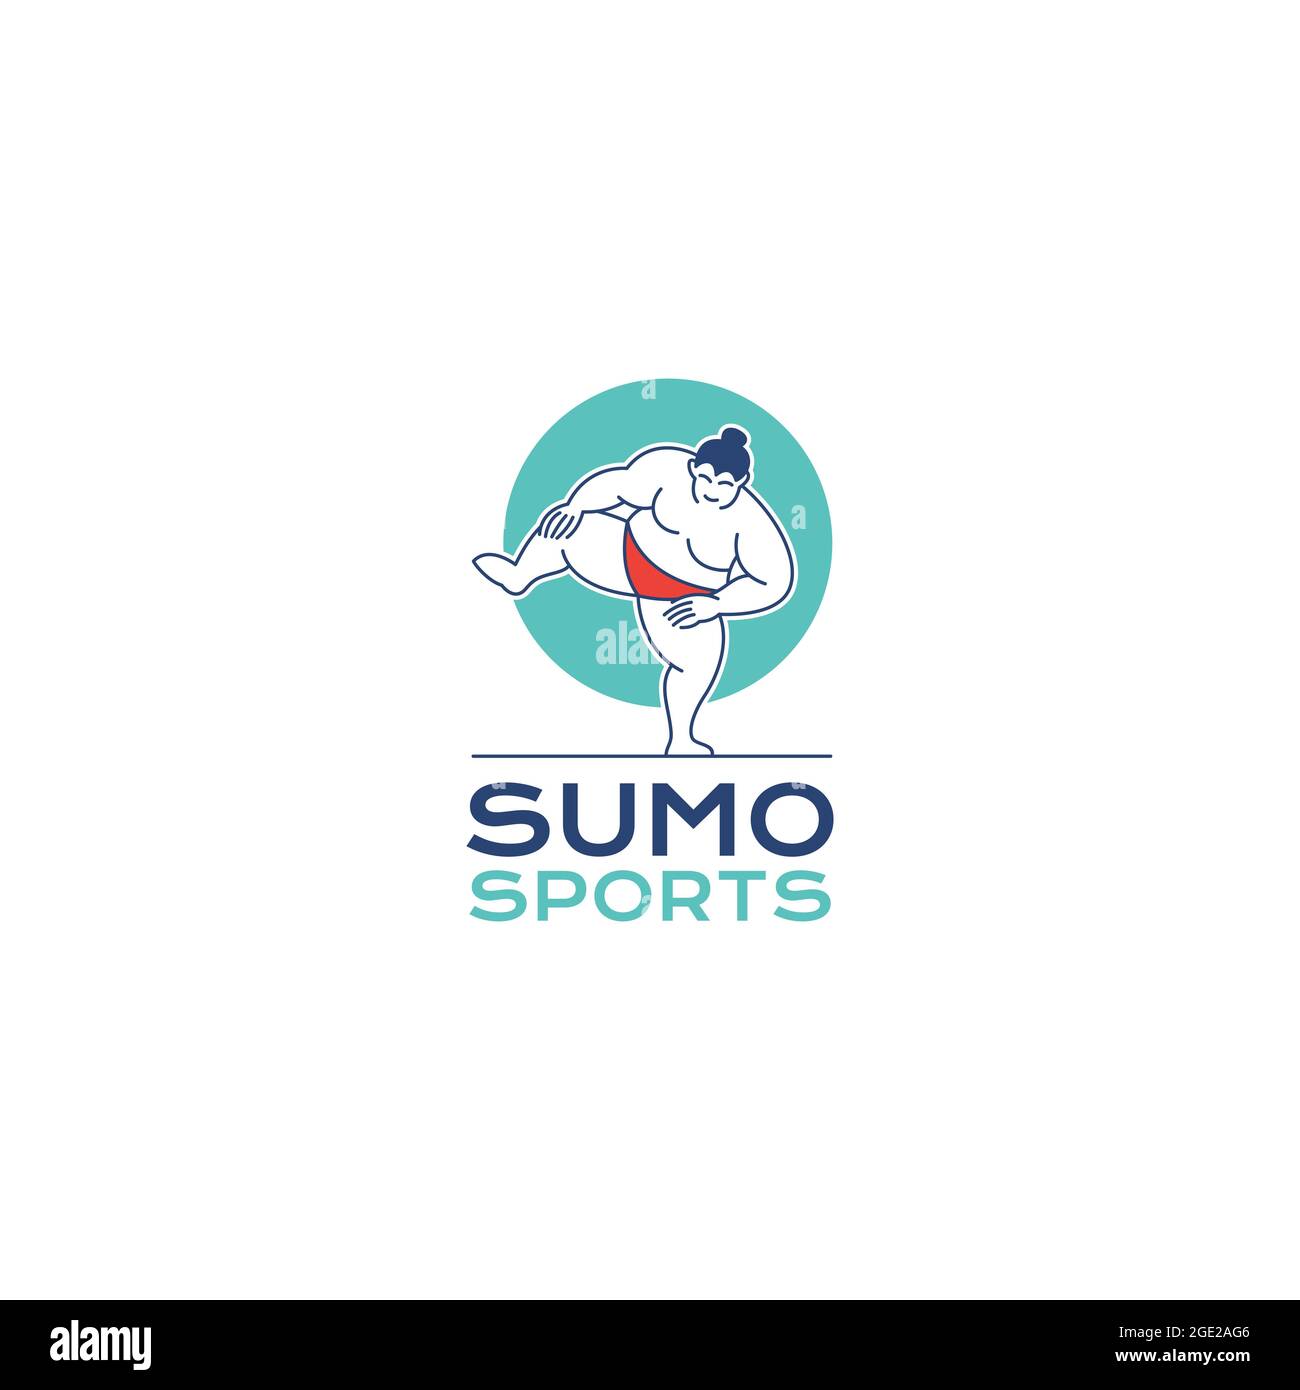 Sumo wrestler Logo. Fat, overweight man. Japanese Traditional sport logo design inspiration Stock Vector